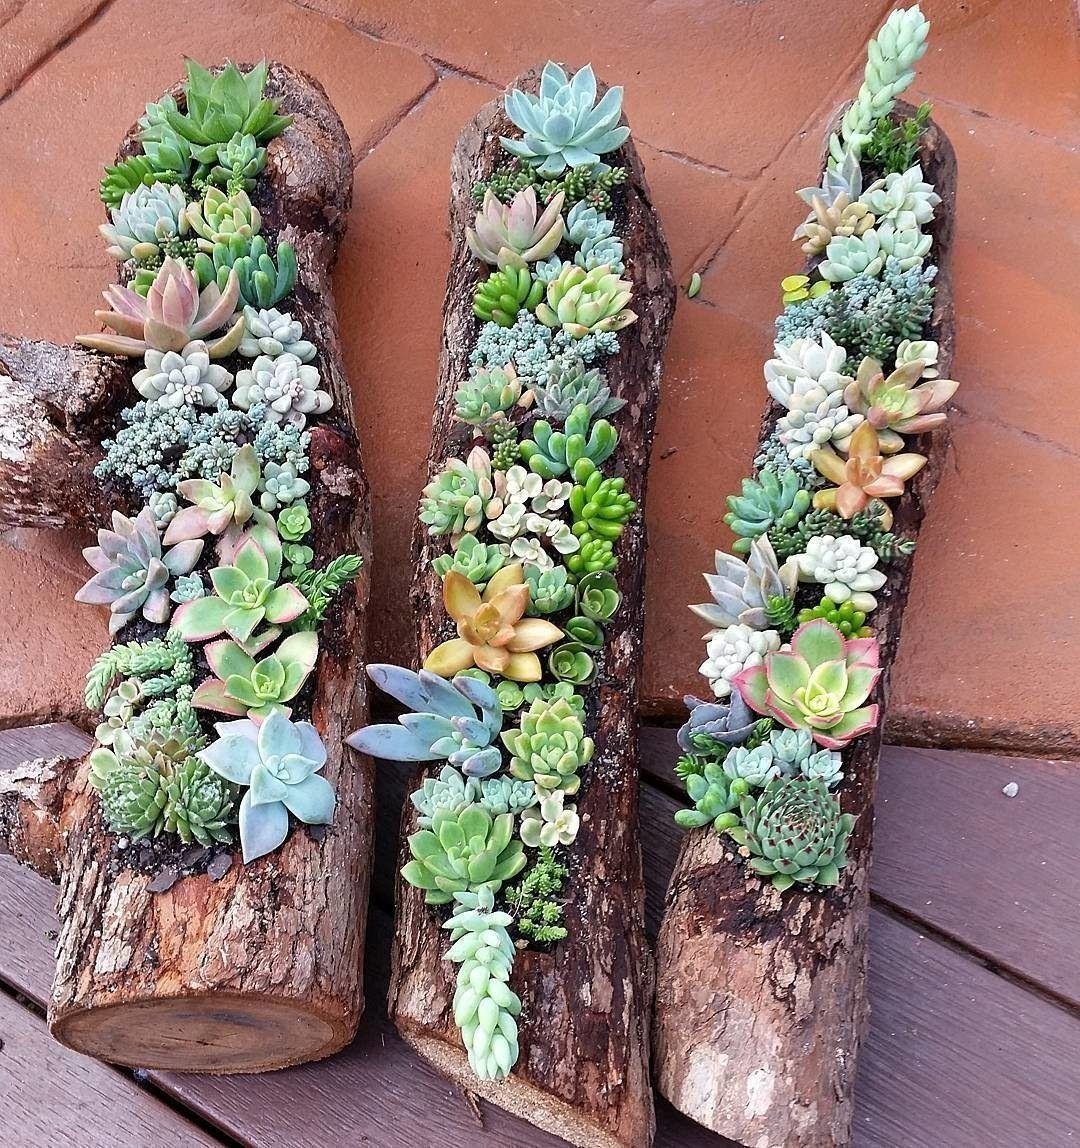 60 Beautiful Succulent Ideas For Summer -   8 plants Succulent in logs ideas